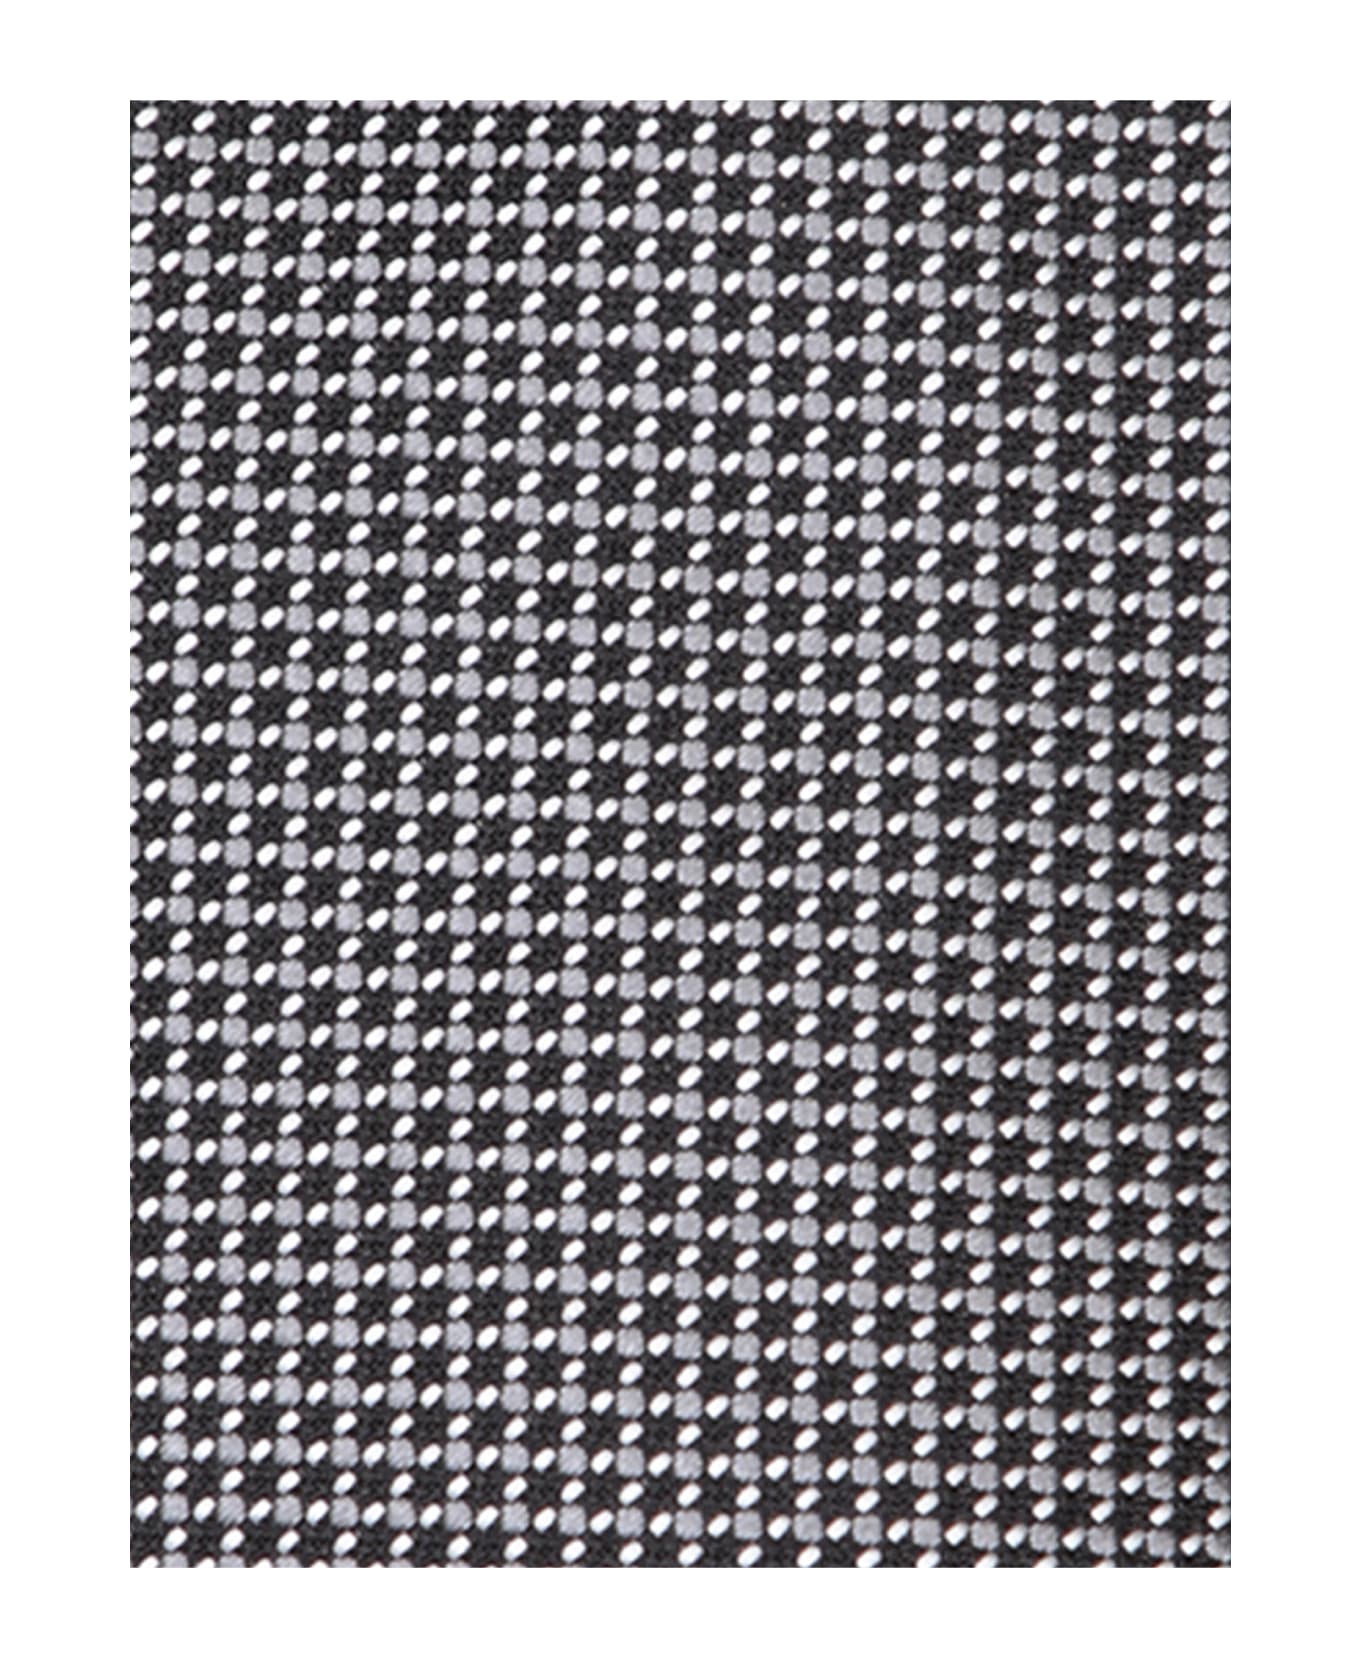 Canali Micropattern White/grey/black Tie - Black